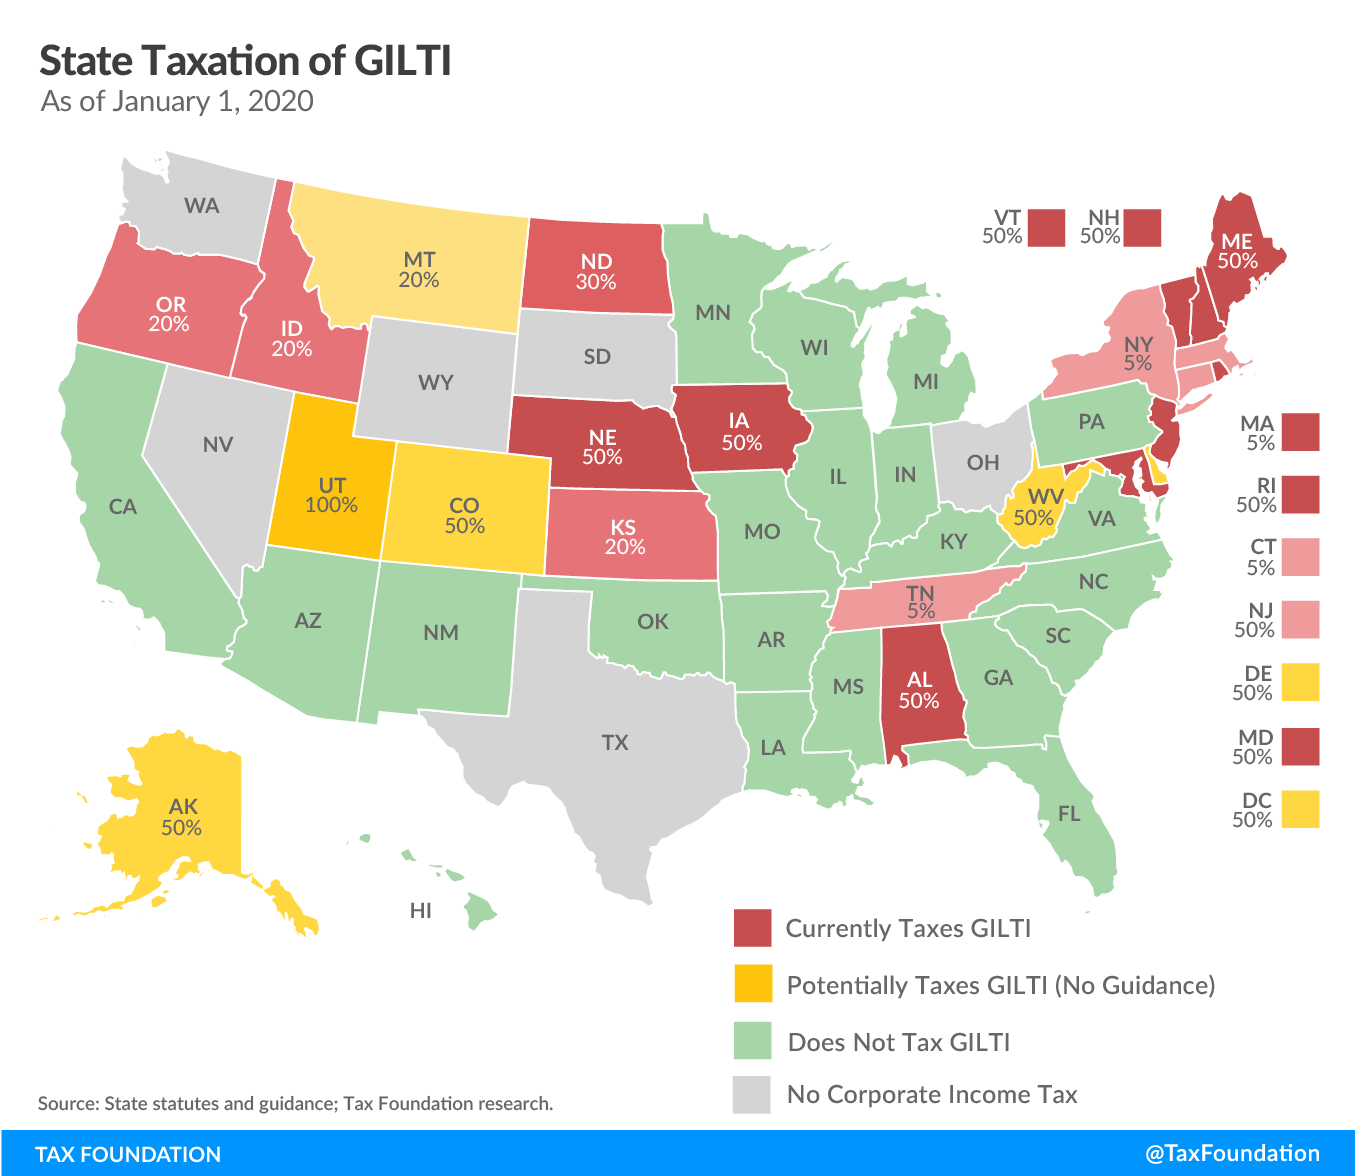 State taxation of GILTI